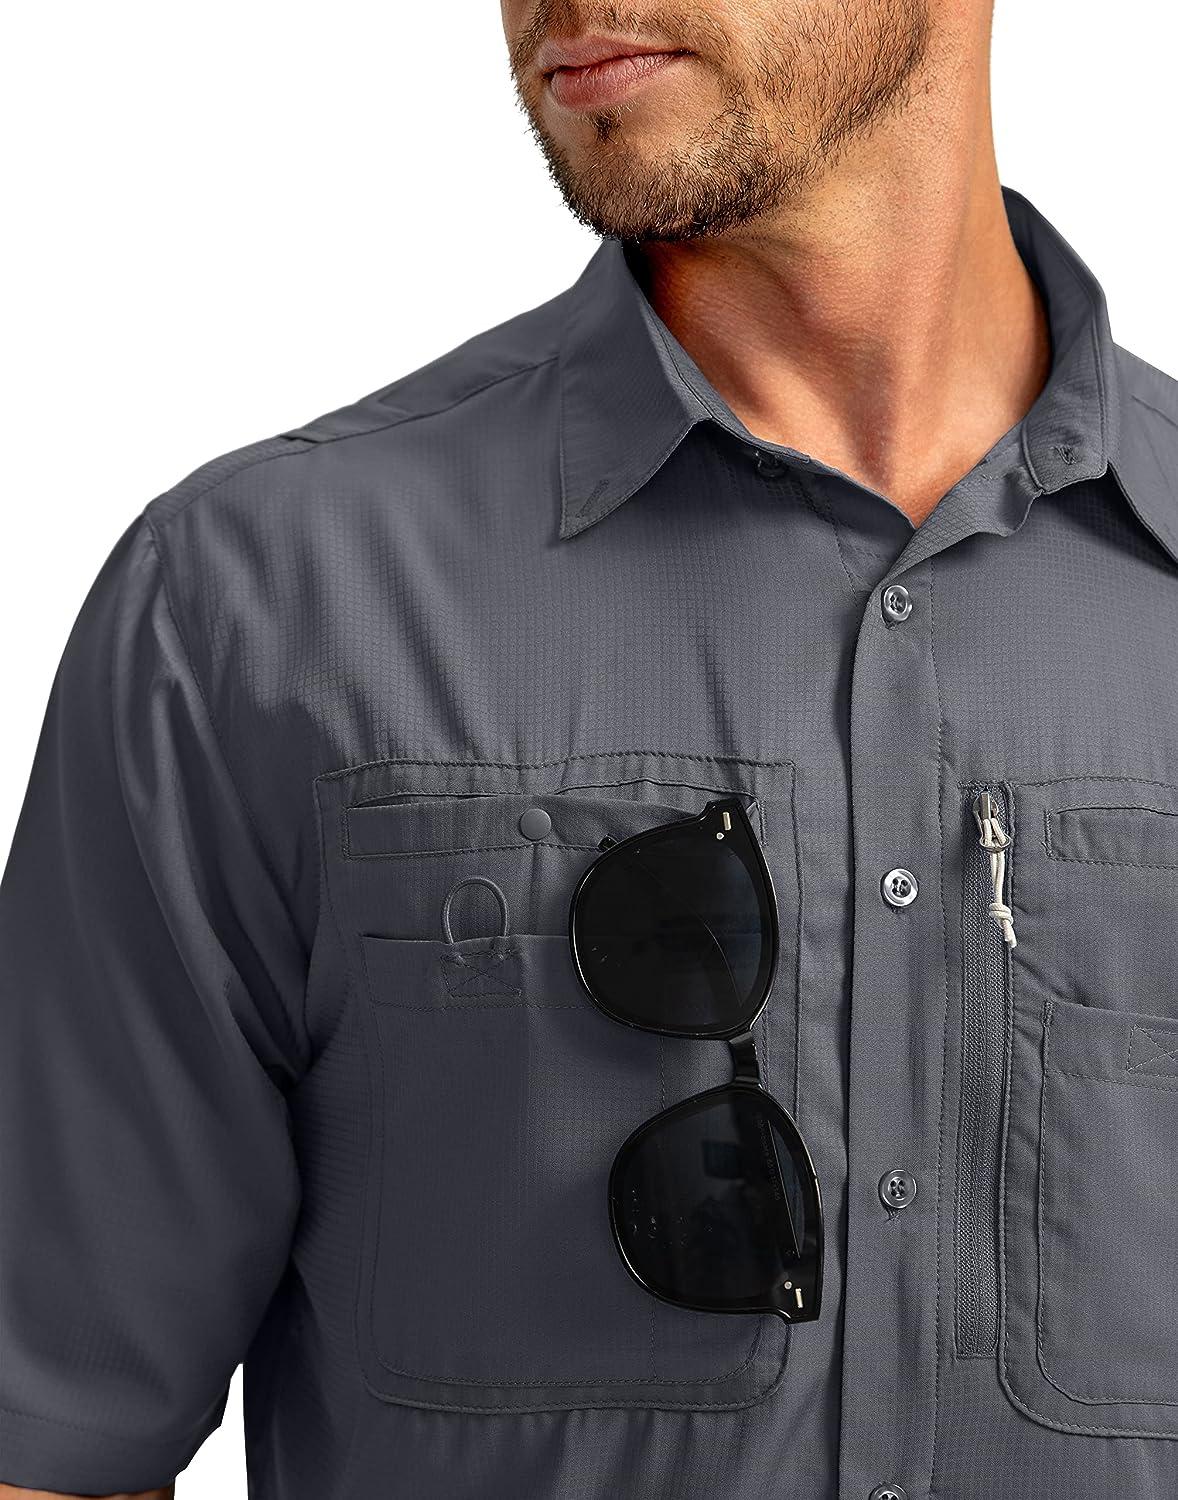 Men's Fishing Shirts with Zipper Pockets UPF 50+ Lightweight Cool Short  Sleeve Button Down Shirts for Men Casual Hiking Dark Grey X-Large